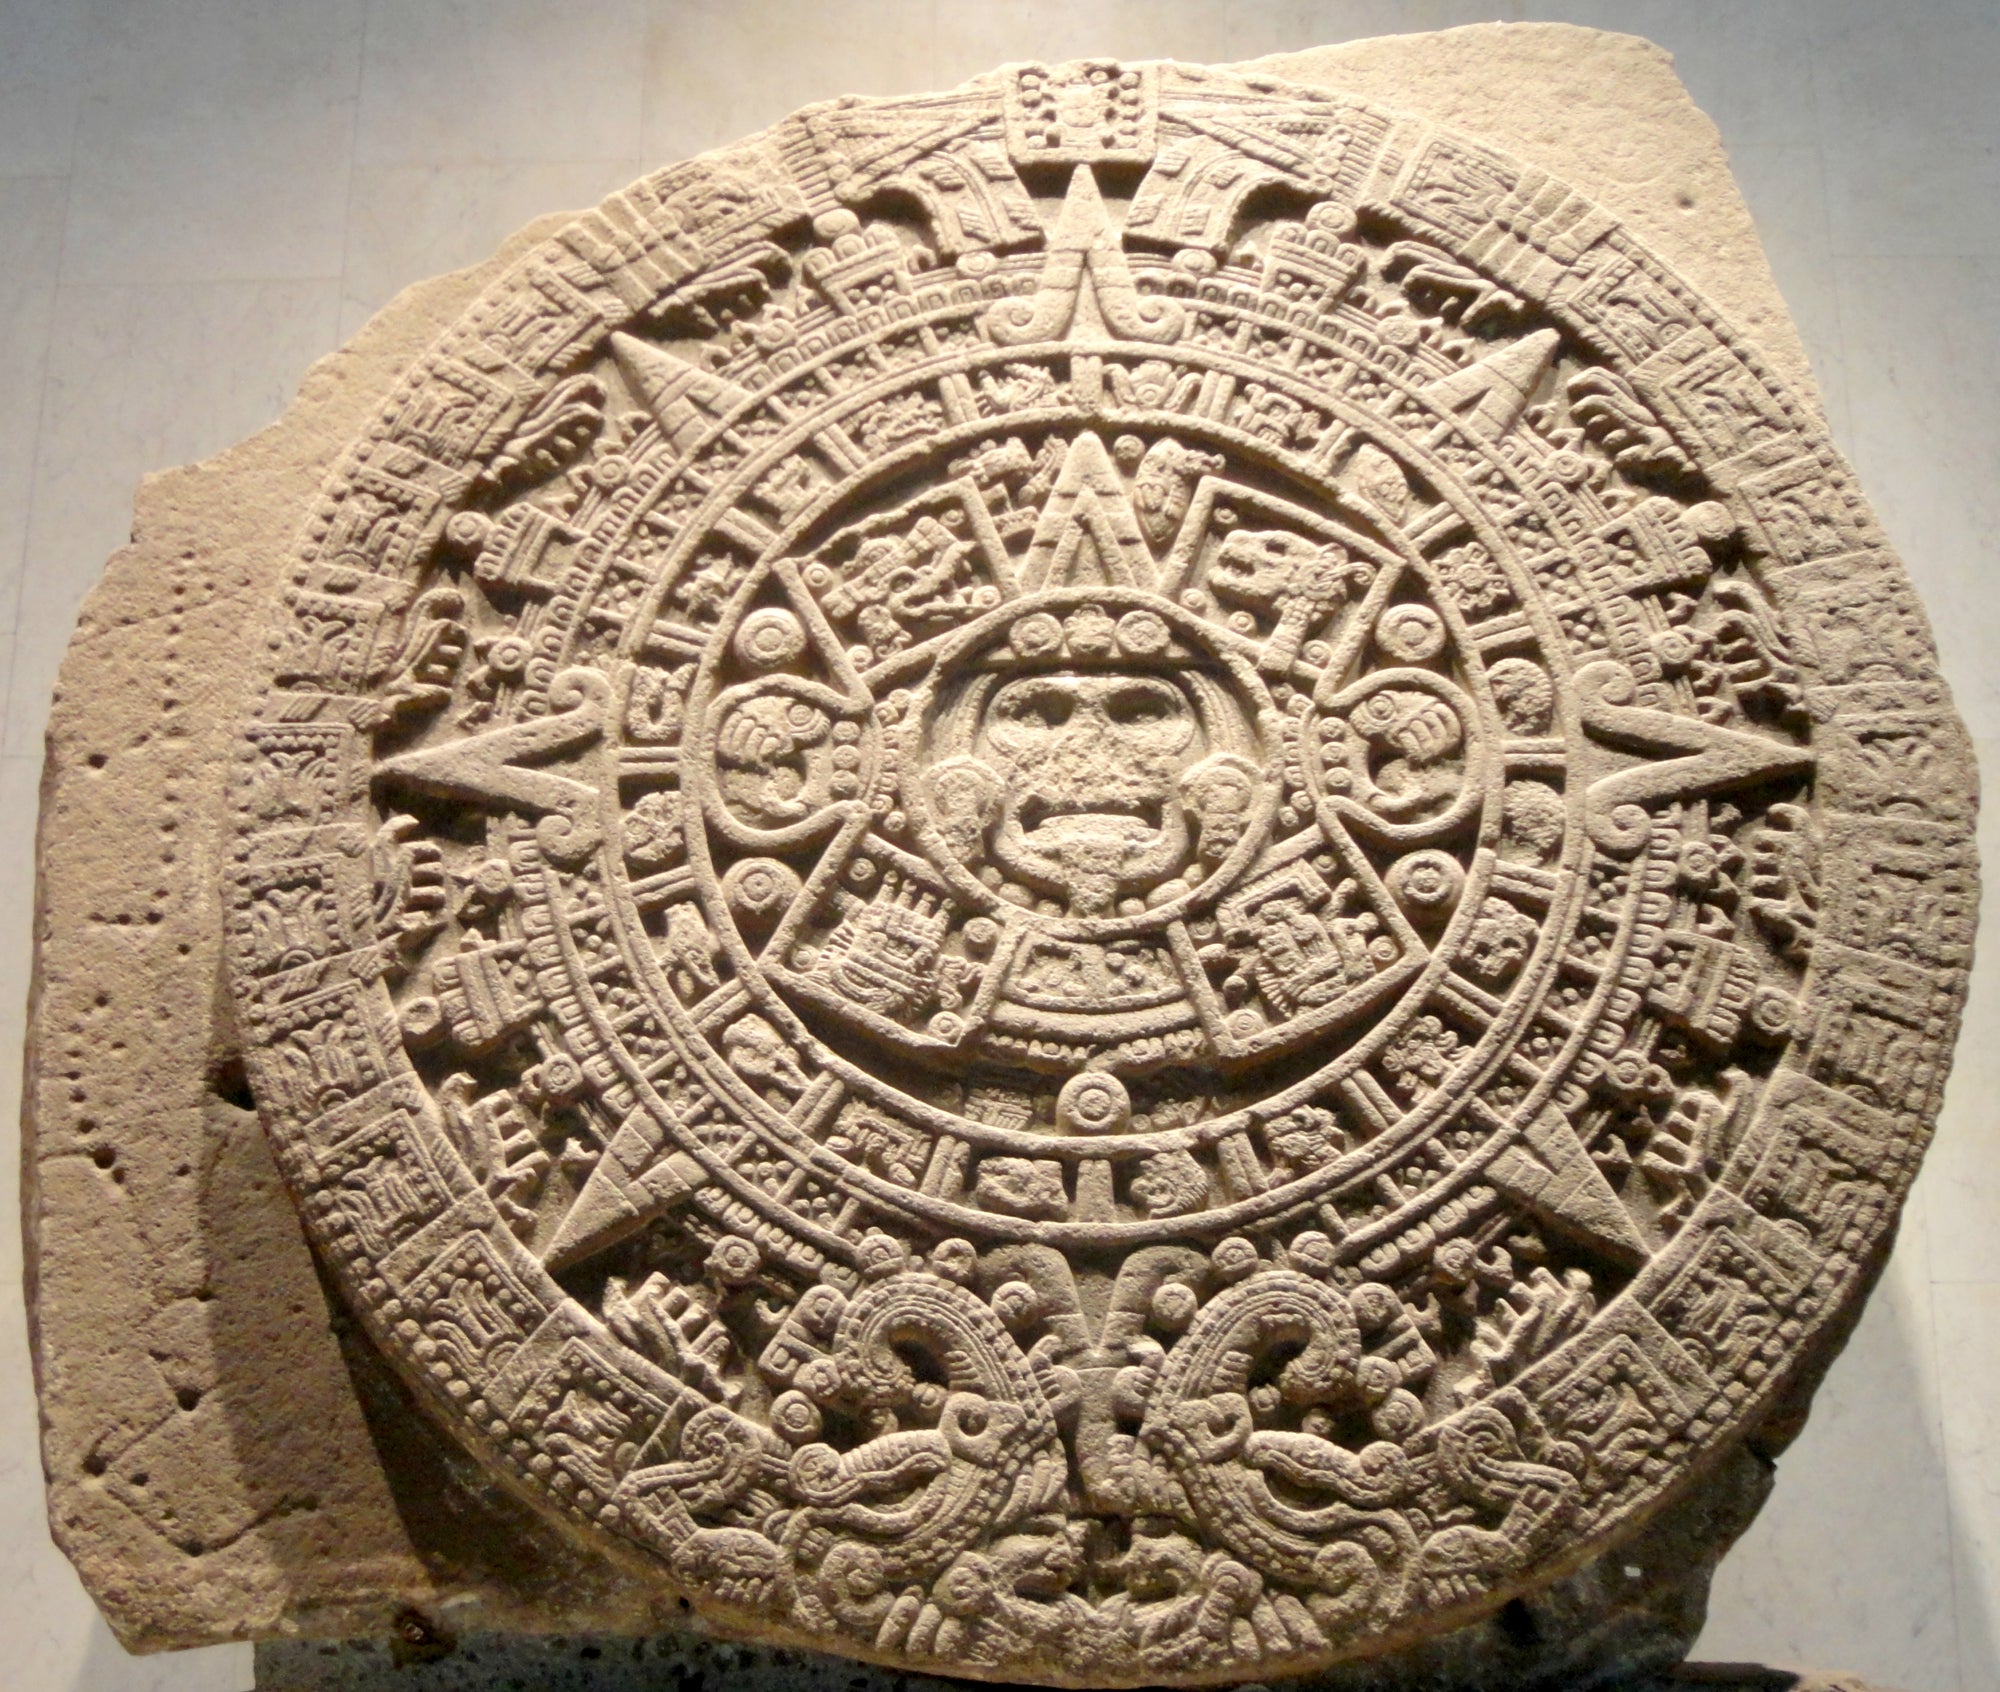 038 Aztec Sun Stone